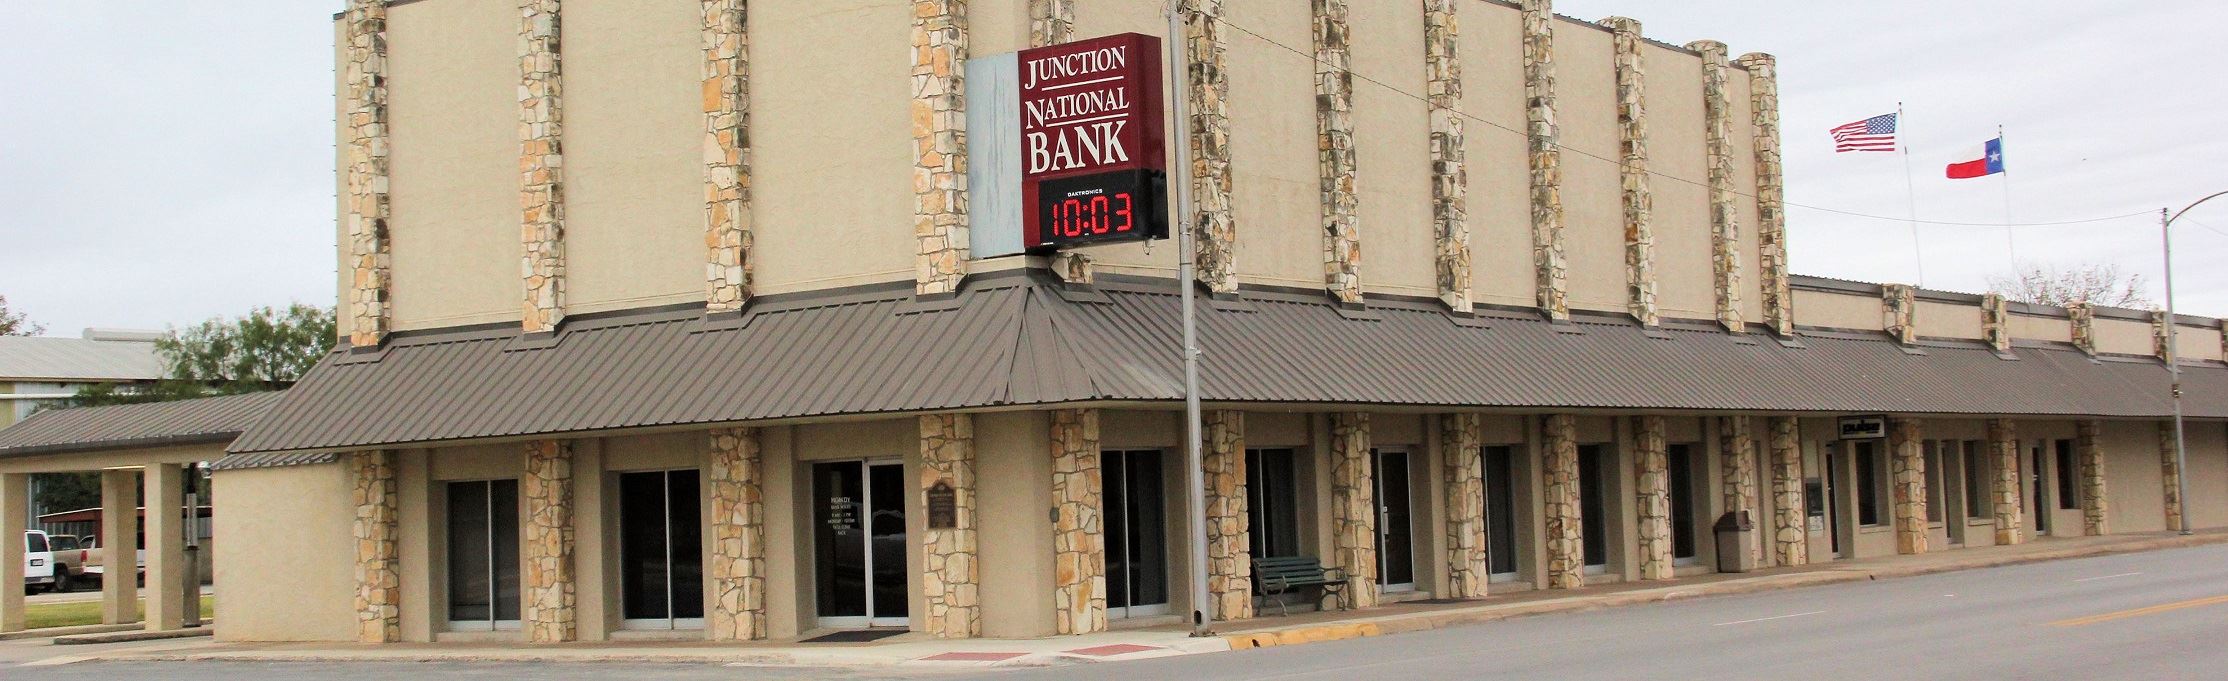 Junction National Bank building